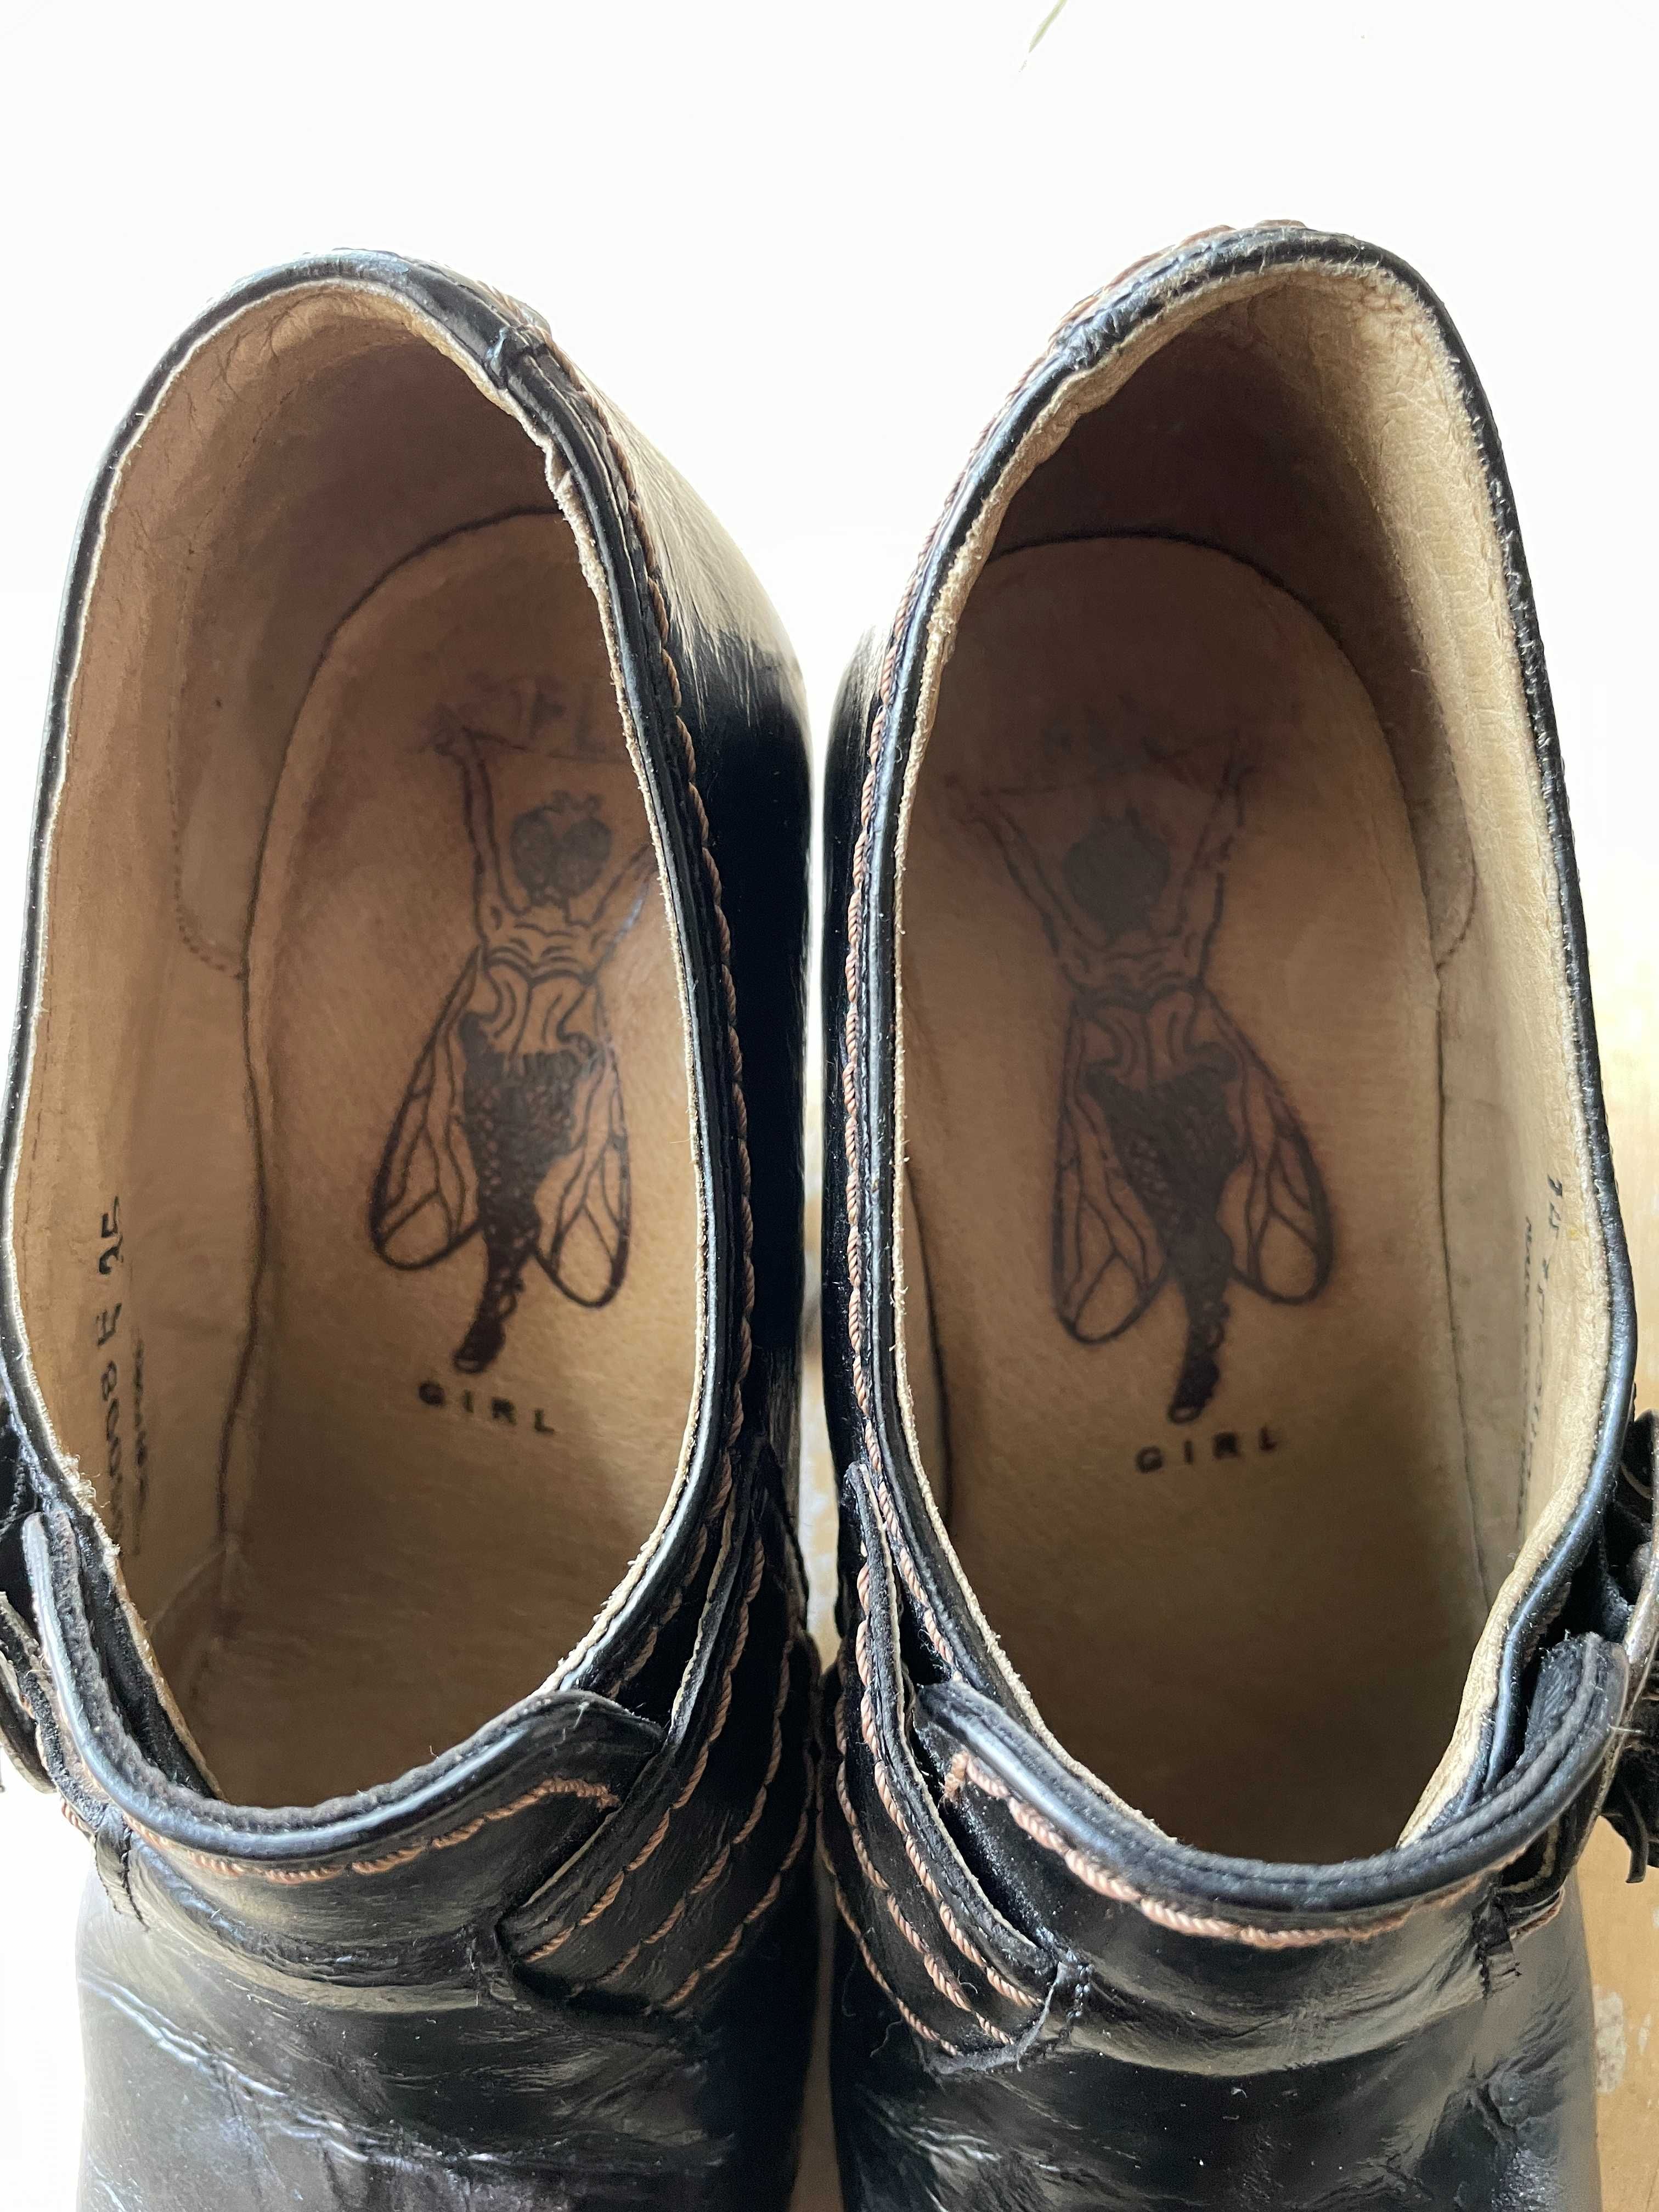 Sapatos estilo vintage, Fly London, 35, em pele